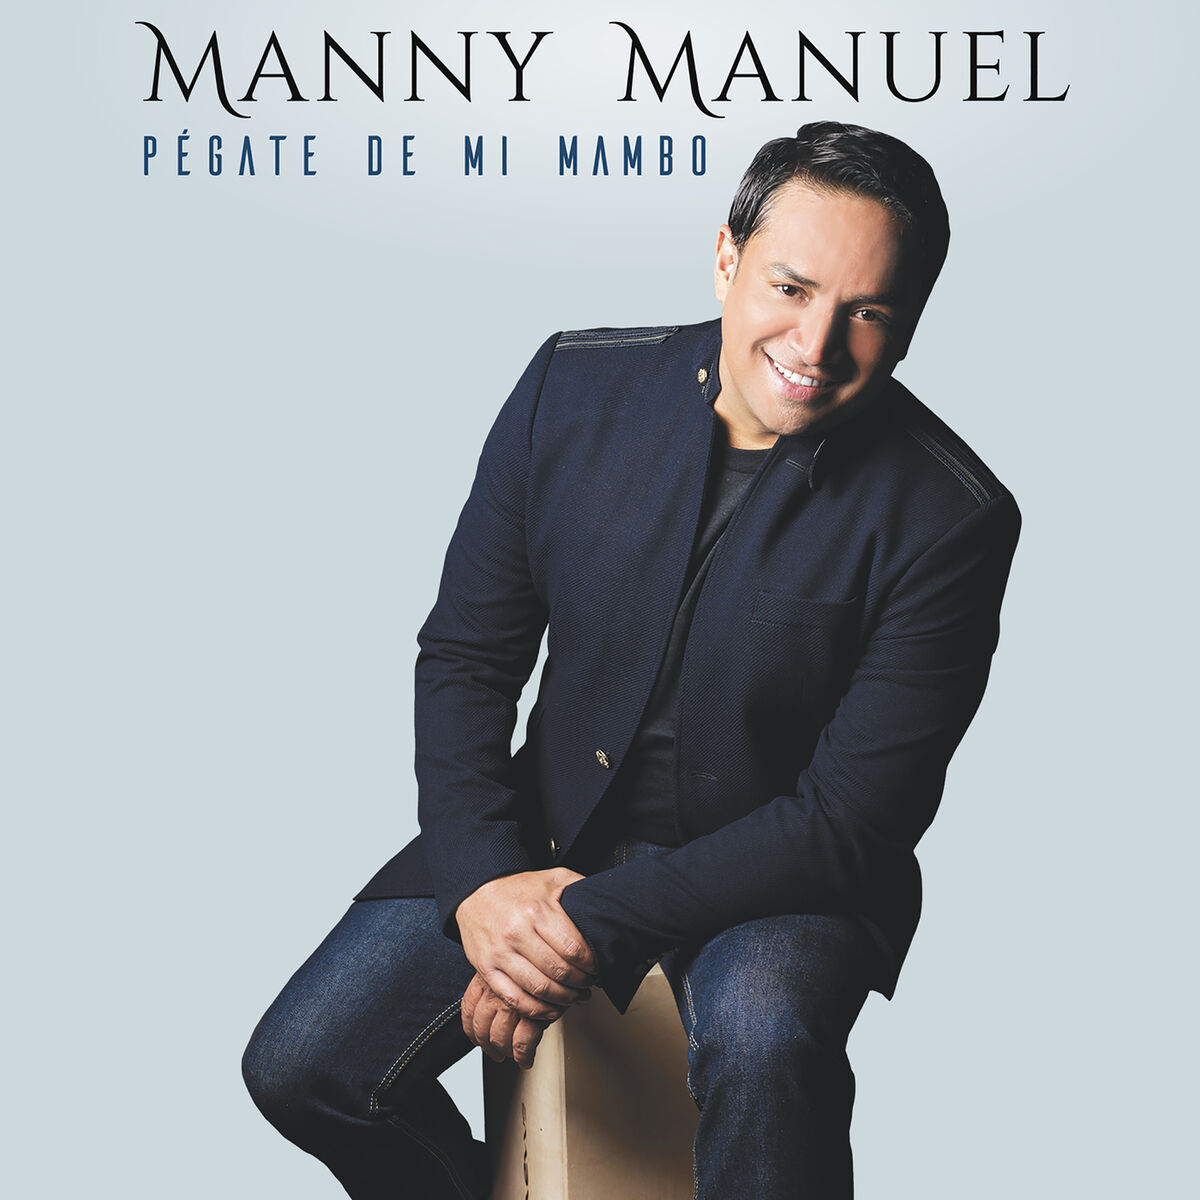 Manny Manuel: albums, songs, playlists | Listen on Deezer